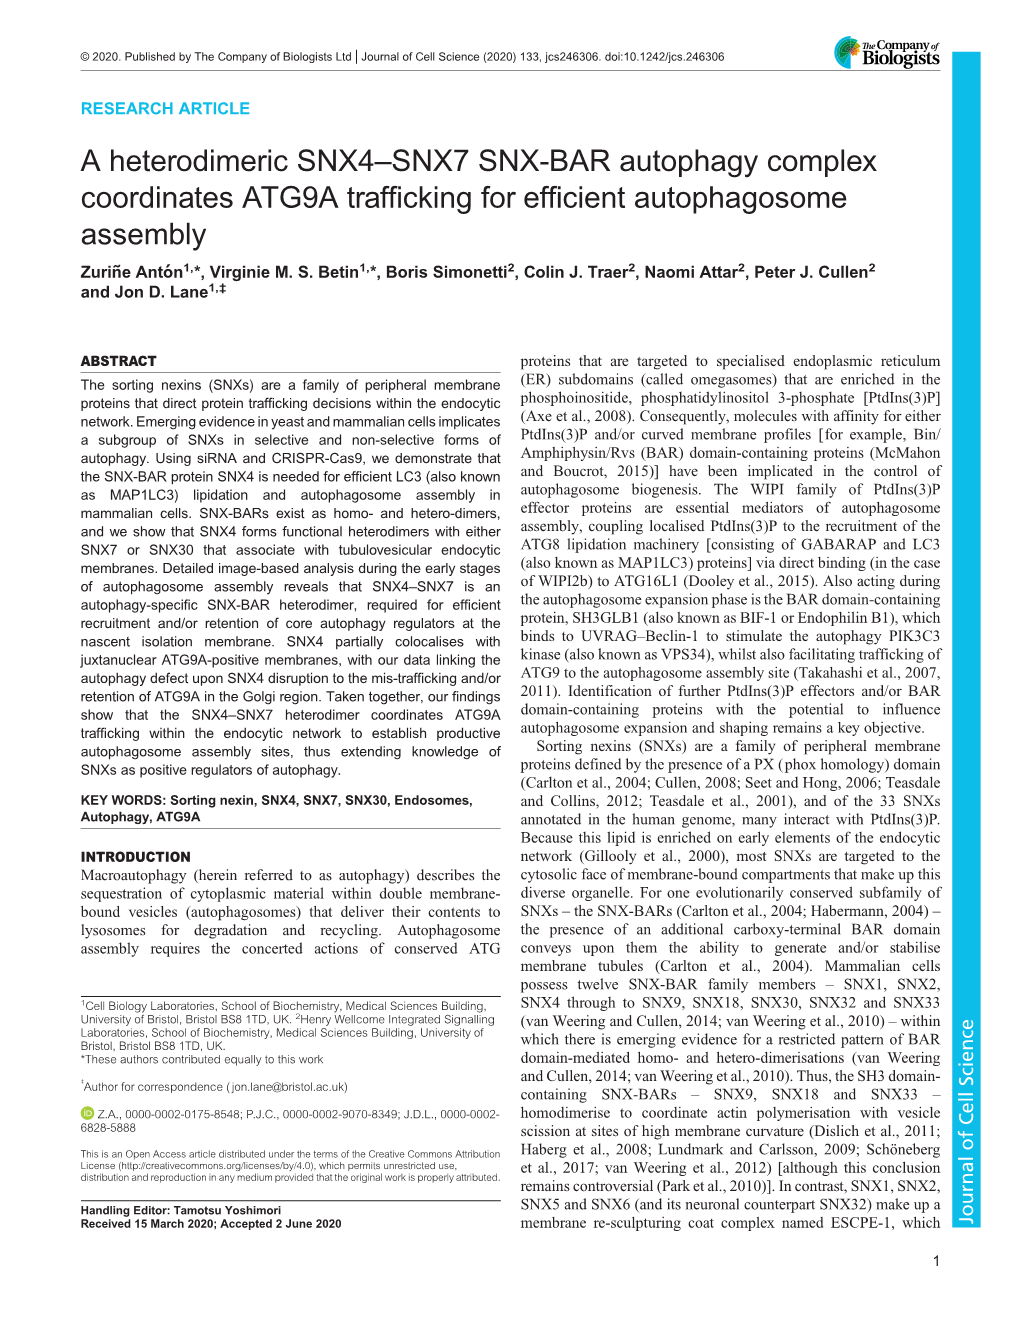 A Heterodimeric SNX4–SNX7 SNX-BAR Autophagy Complex Coordinates ATG9A Trafficking for Efficient Autophagosome Assembly Zuriñe Antón1,*, Virginie M